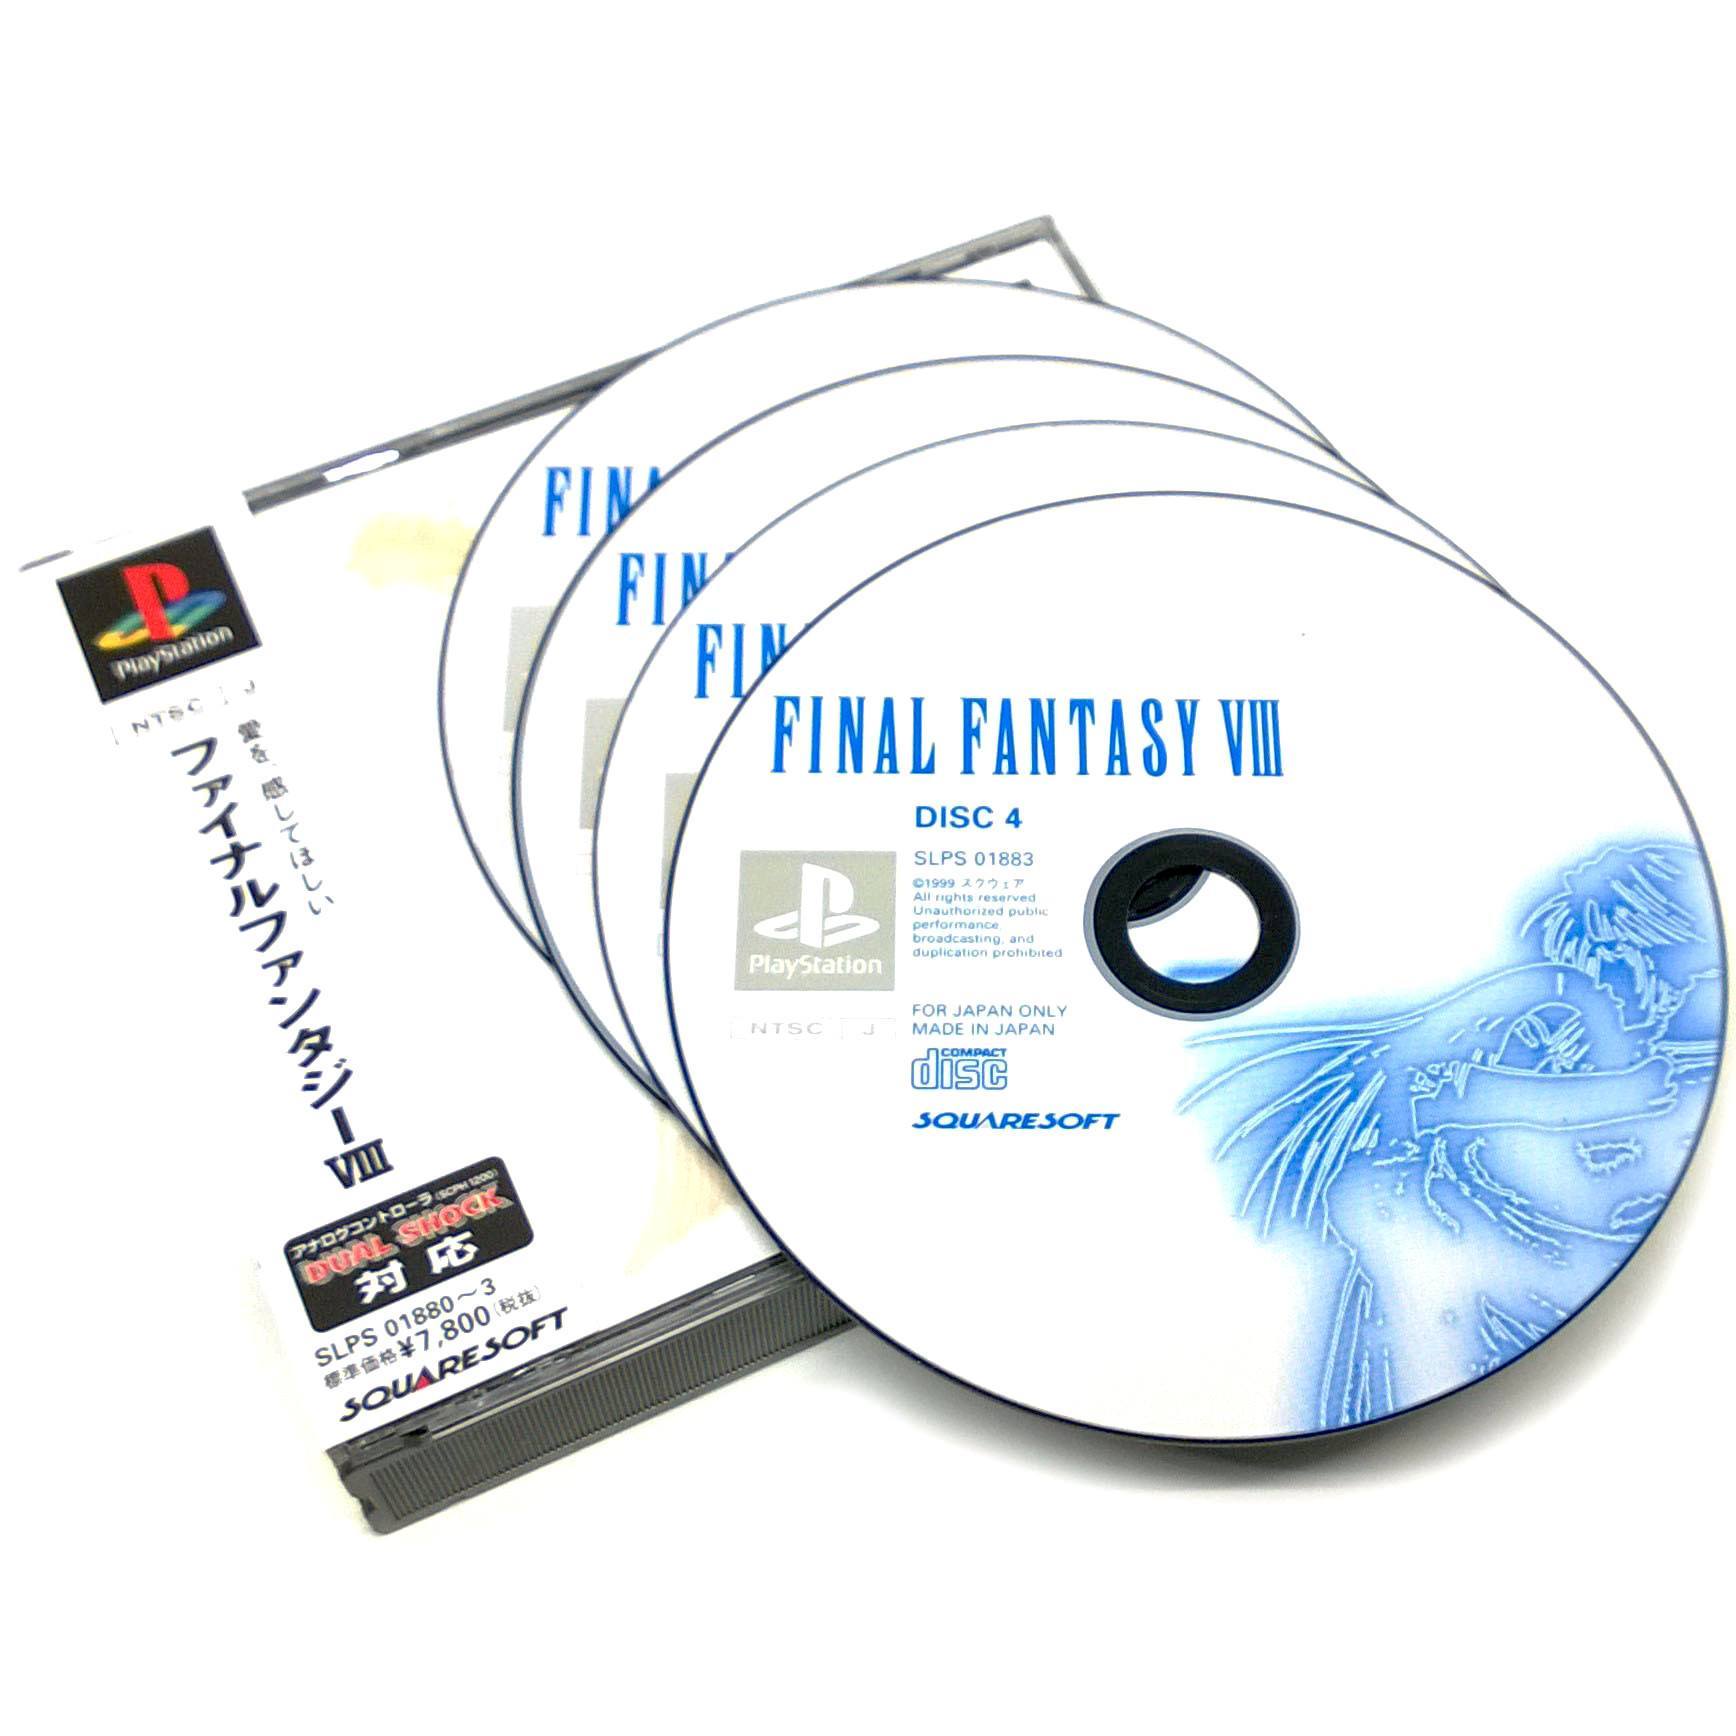 Final Fantasy VIII for PlayStation (import)